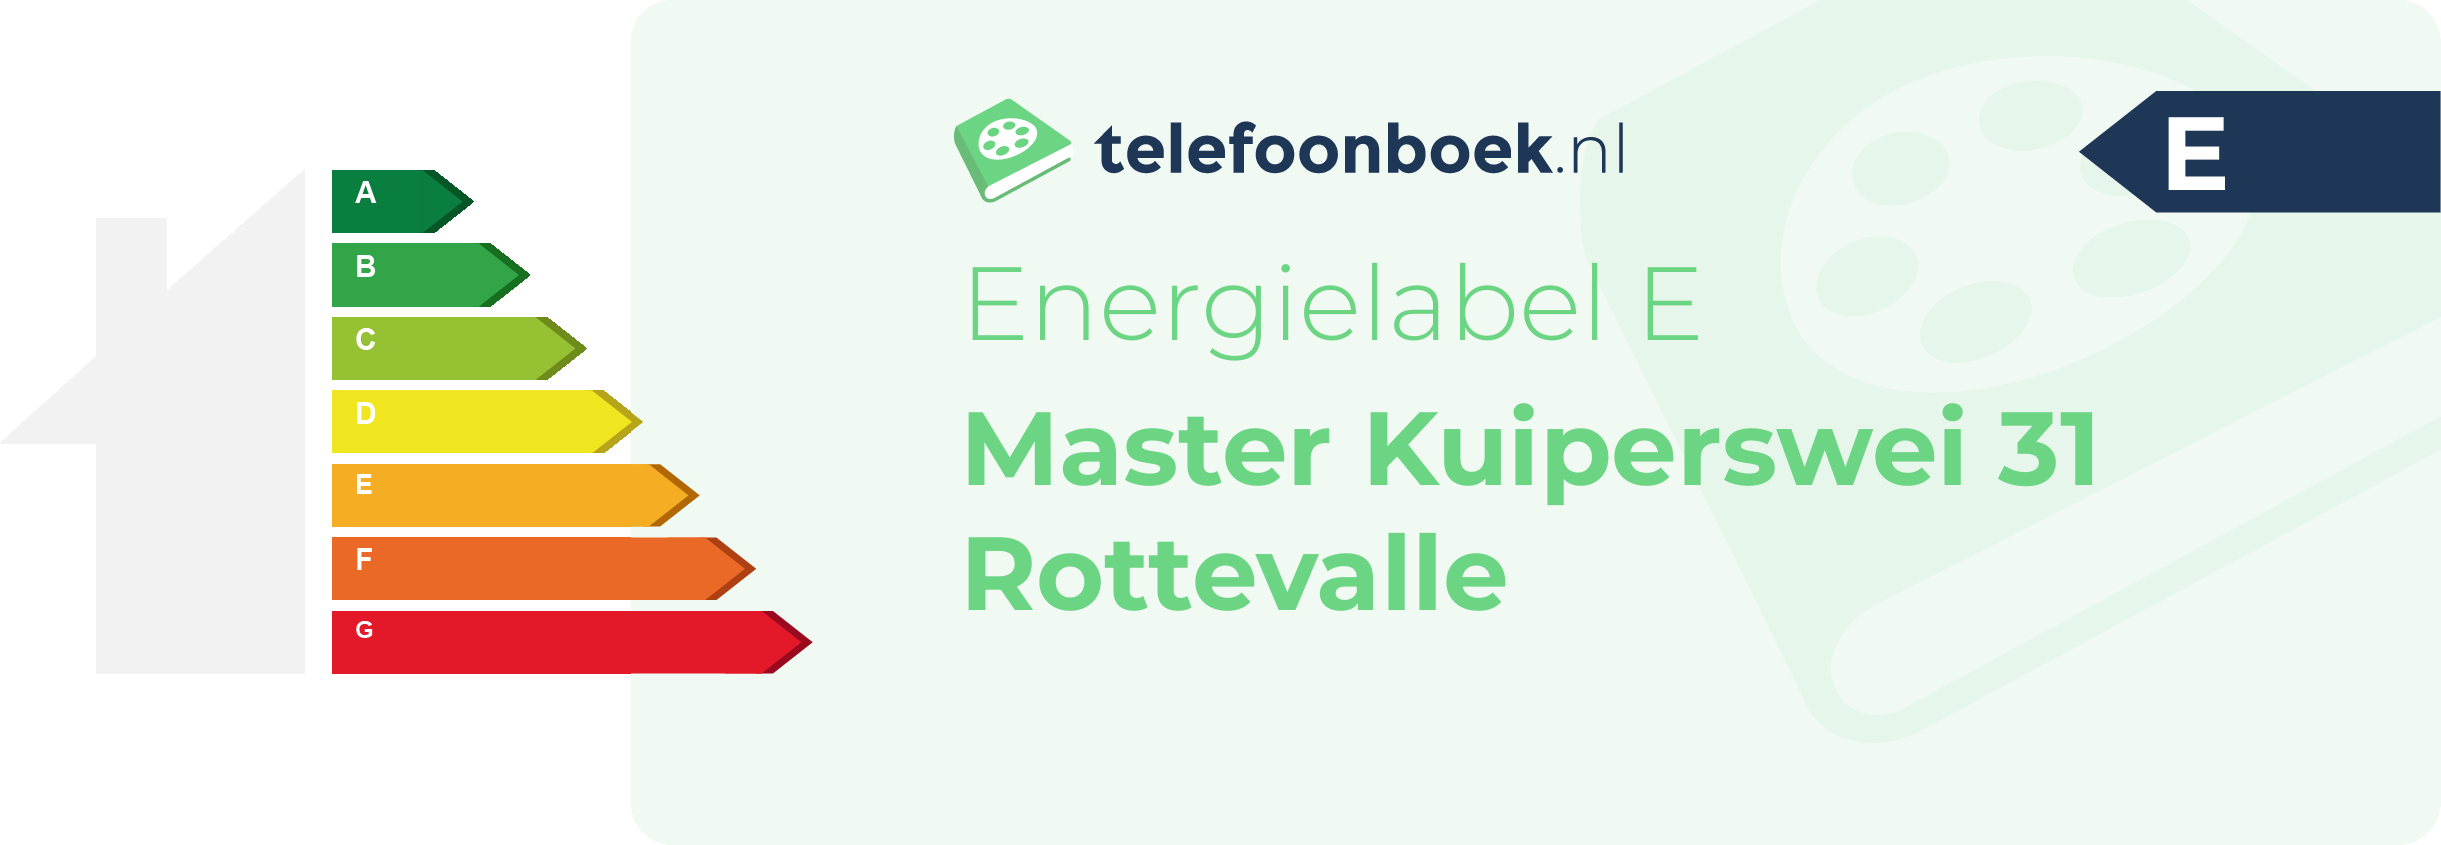 Energielabel Master Kuiperswei 31 Rottevalle